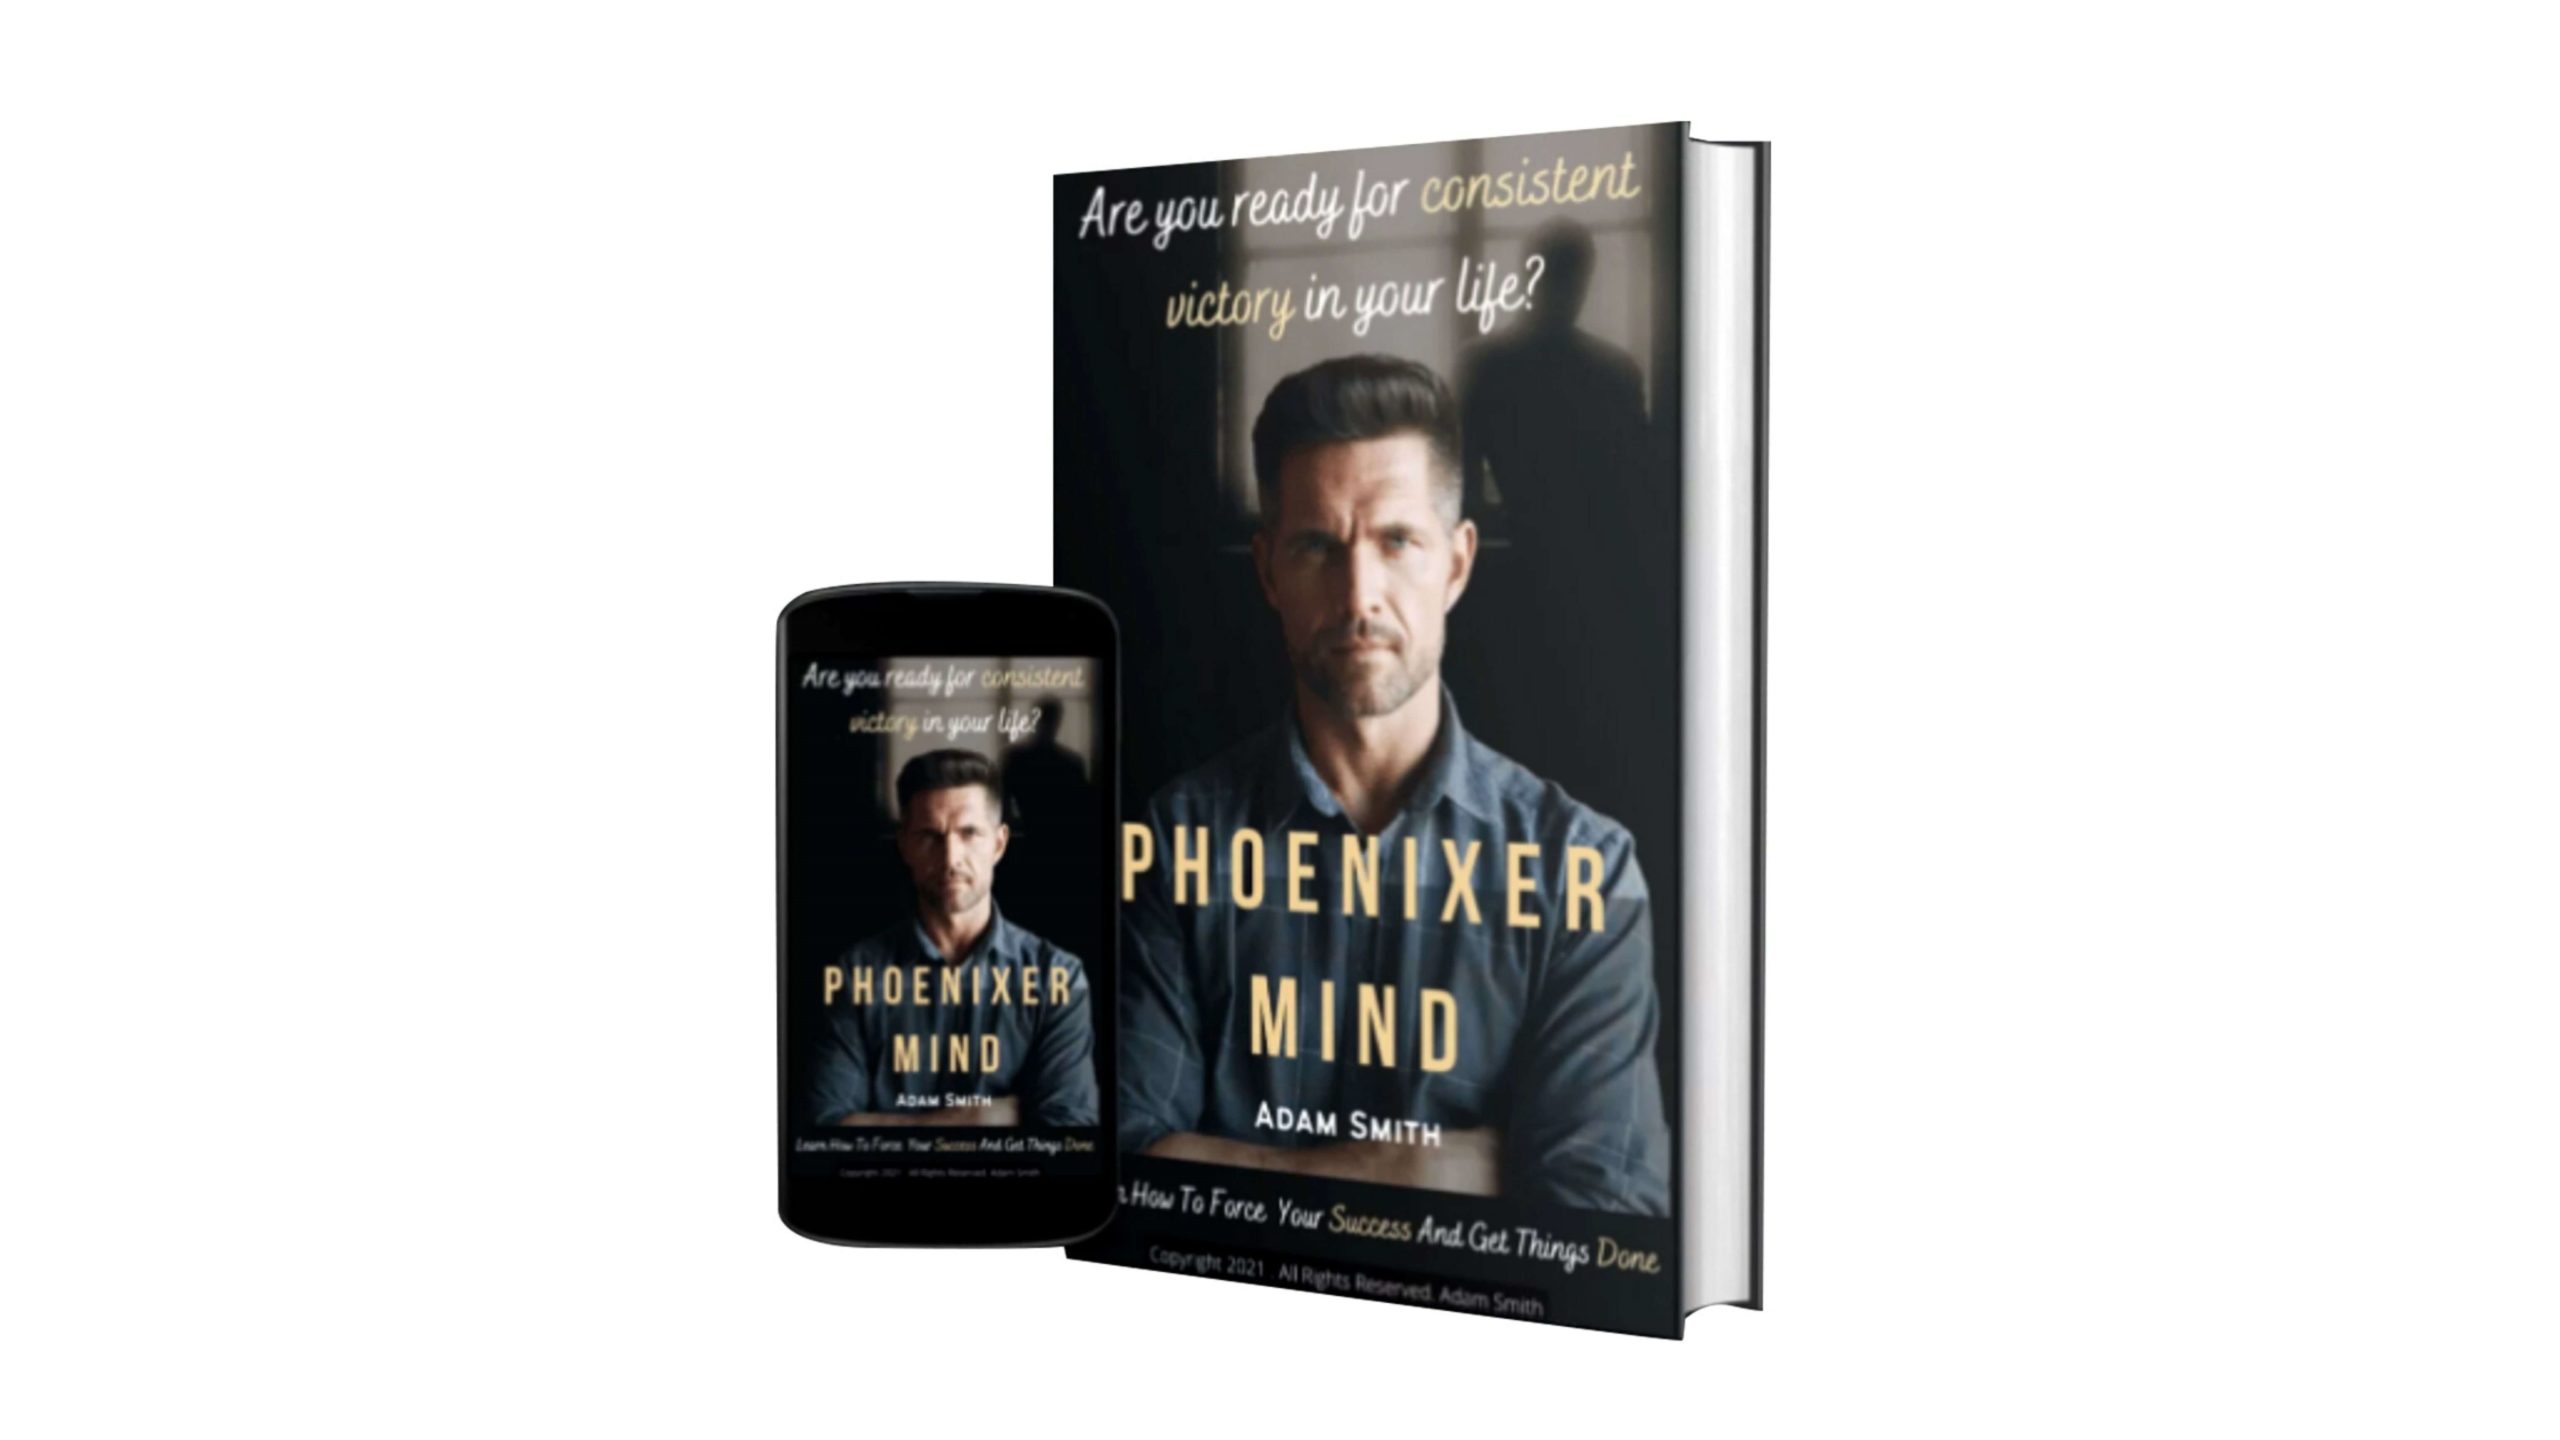 Phoenixer Mind Reviews